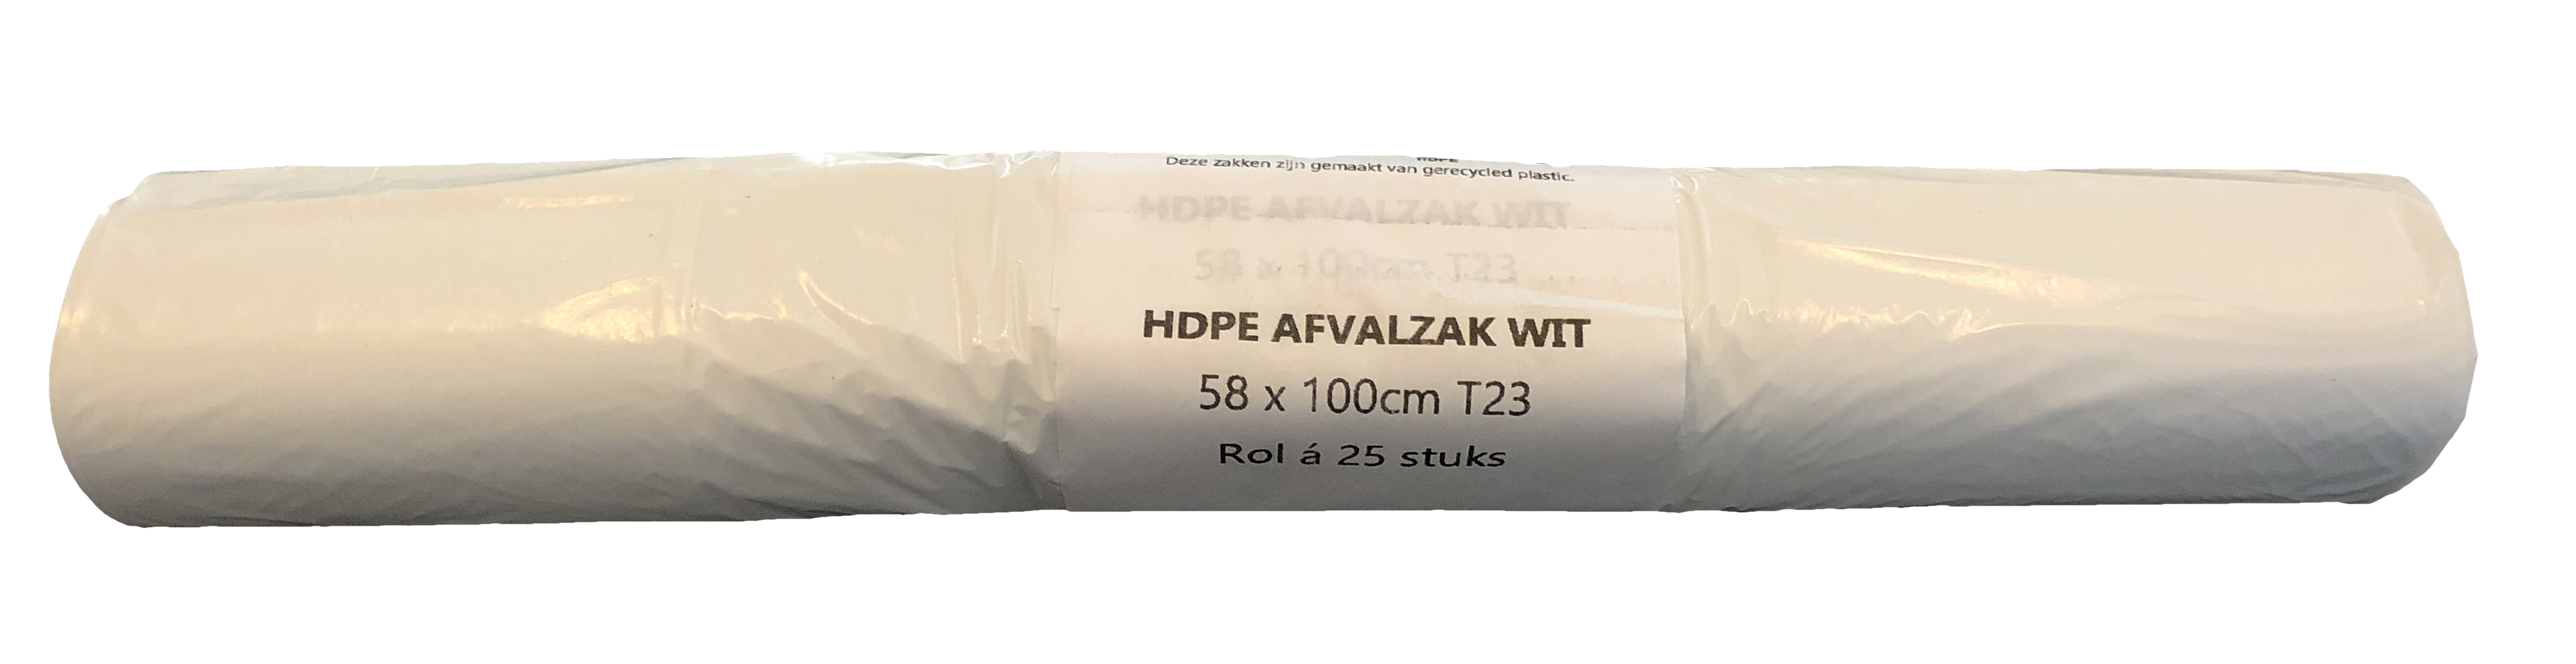 Afvalzak 70 L Wit HDPE T25